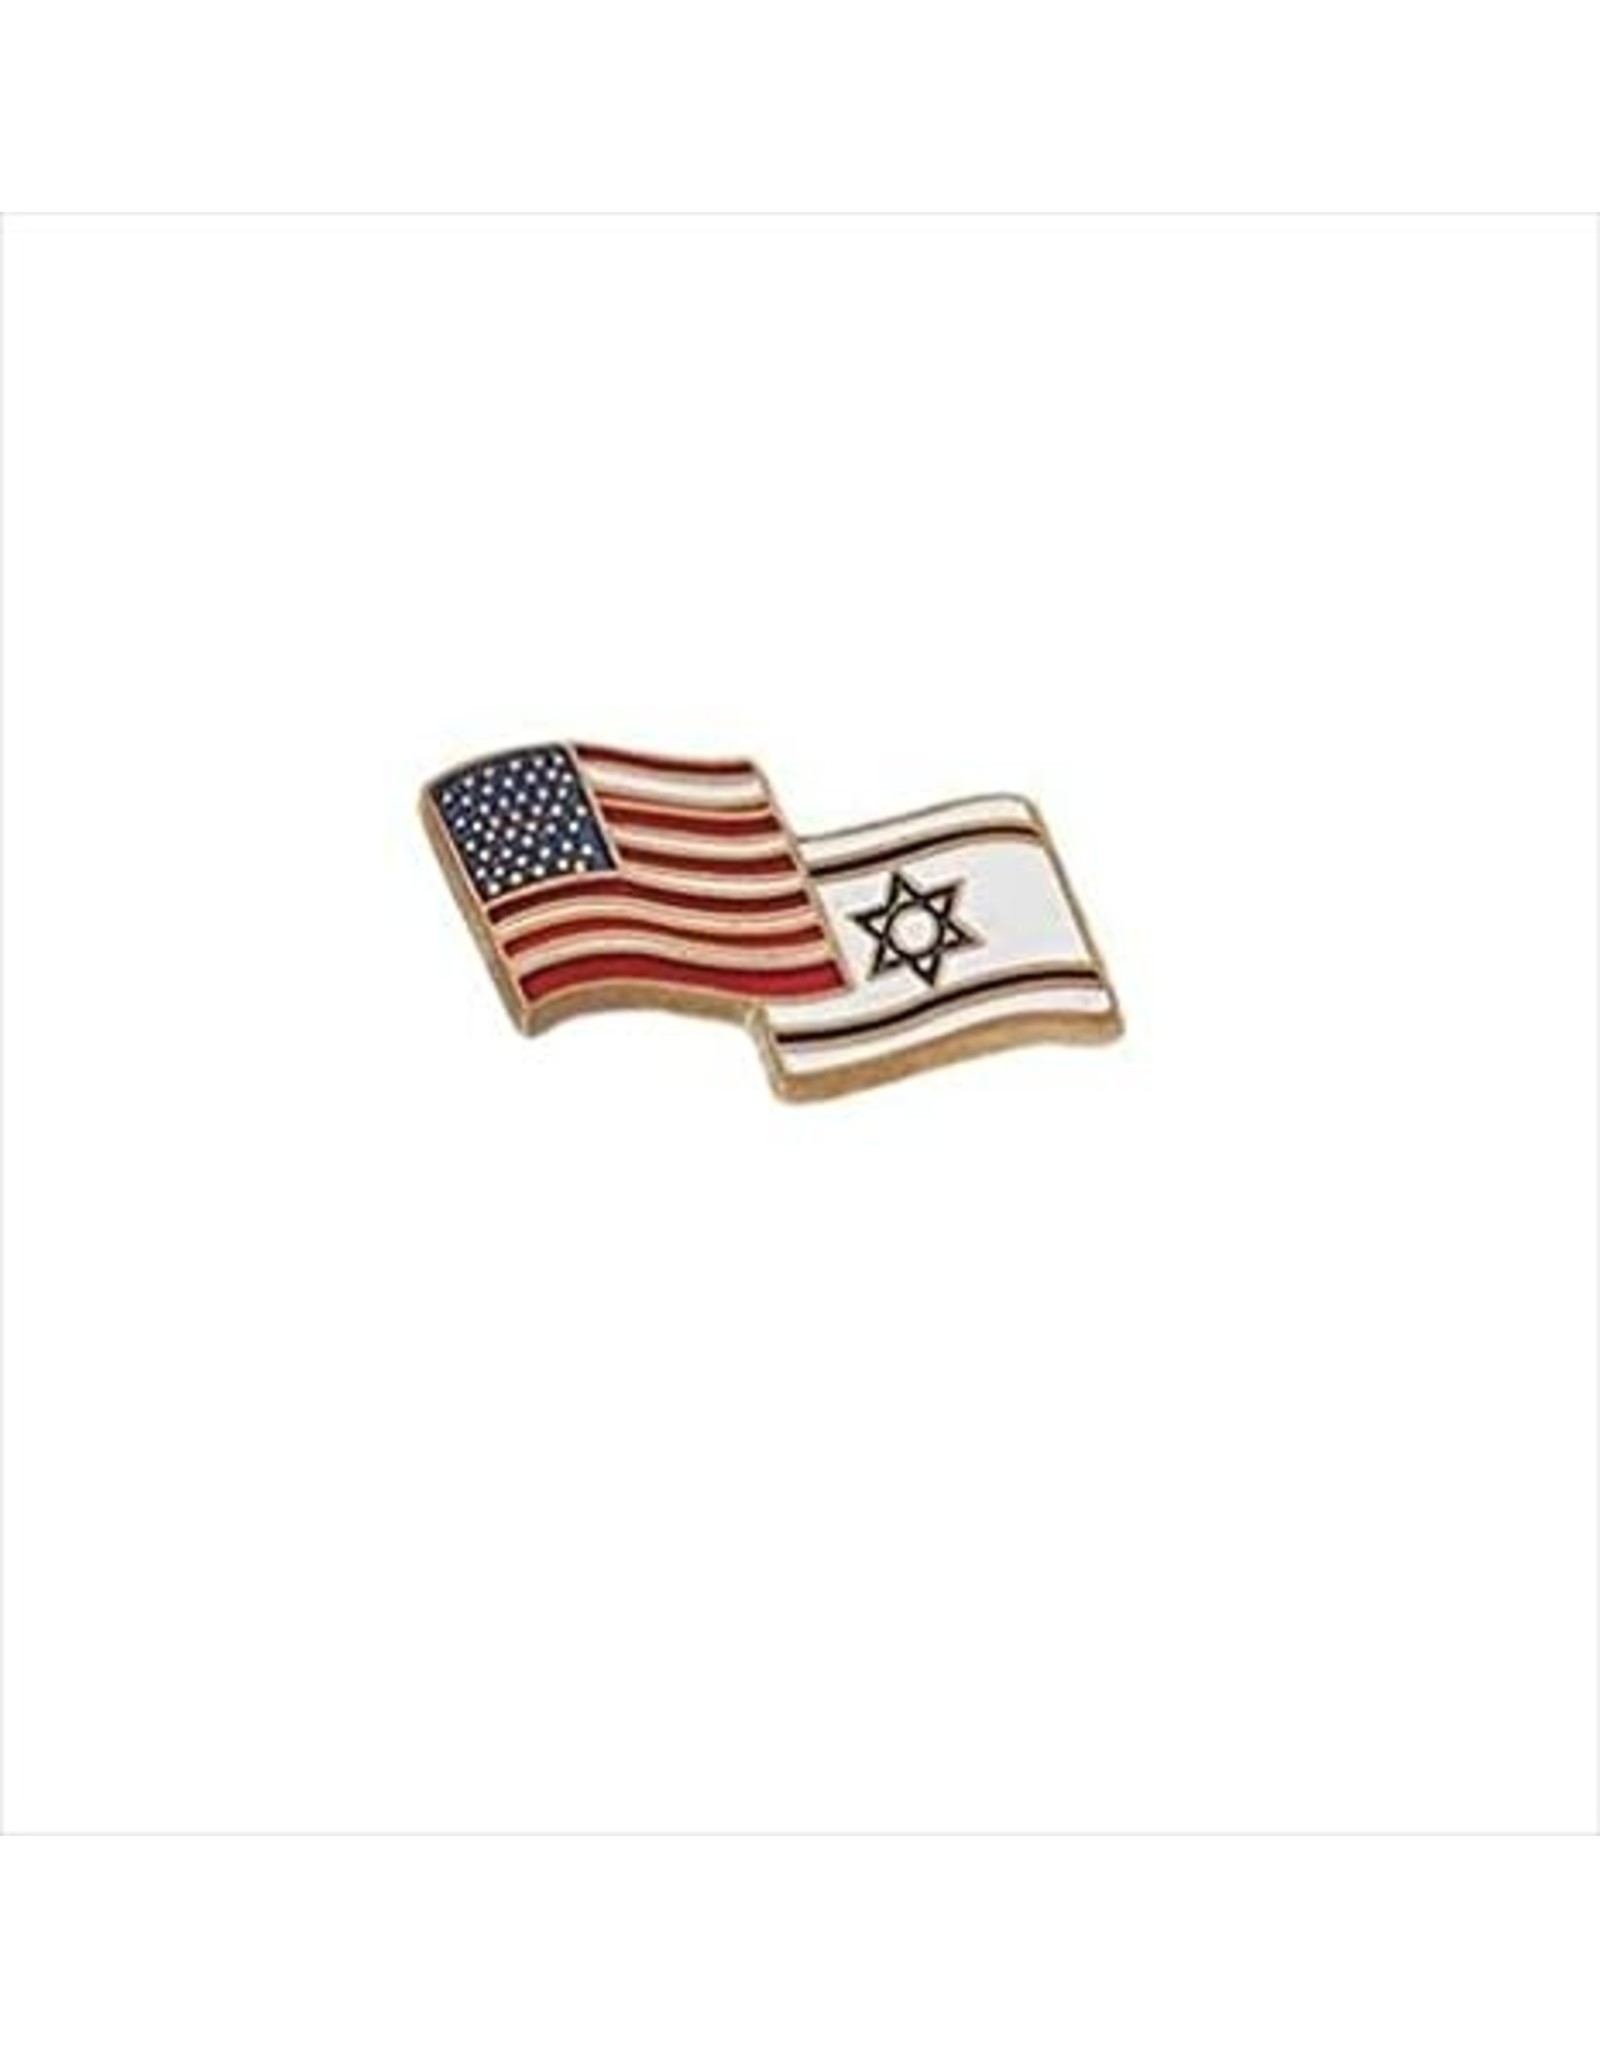 Holy Land Gifts Lapel Pin: Israeli & American Flag Lapel Pin